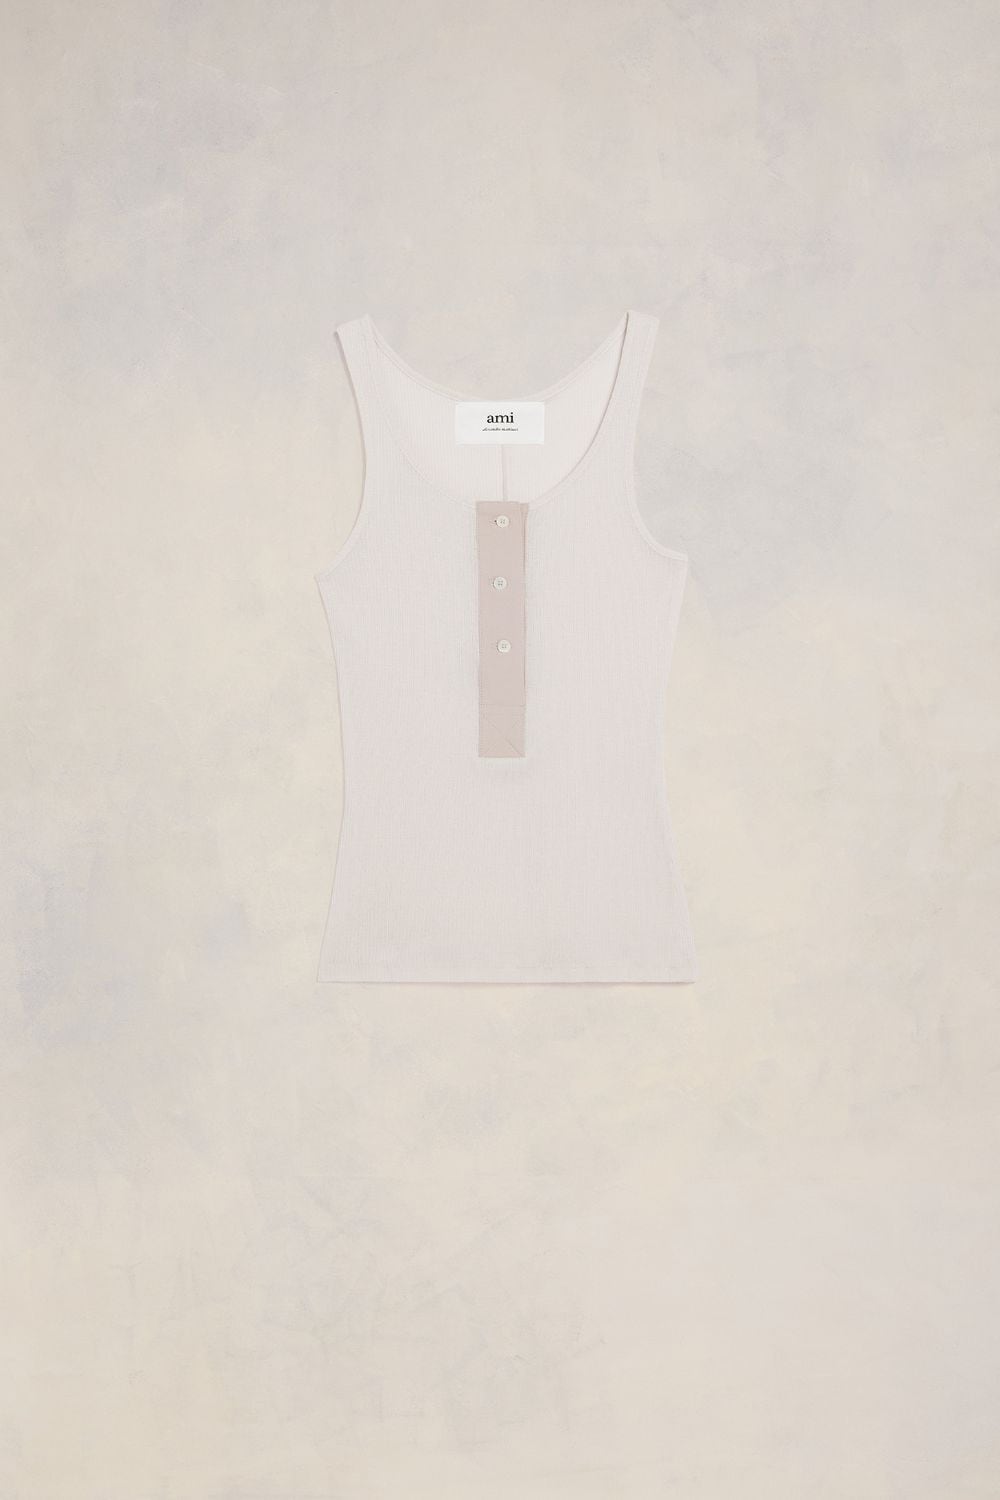 Ami Alexandre Mattiussi Tanktop Grey For Women In White